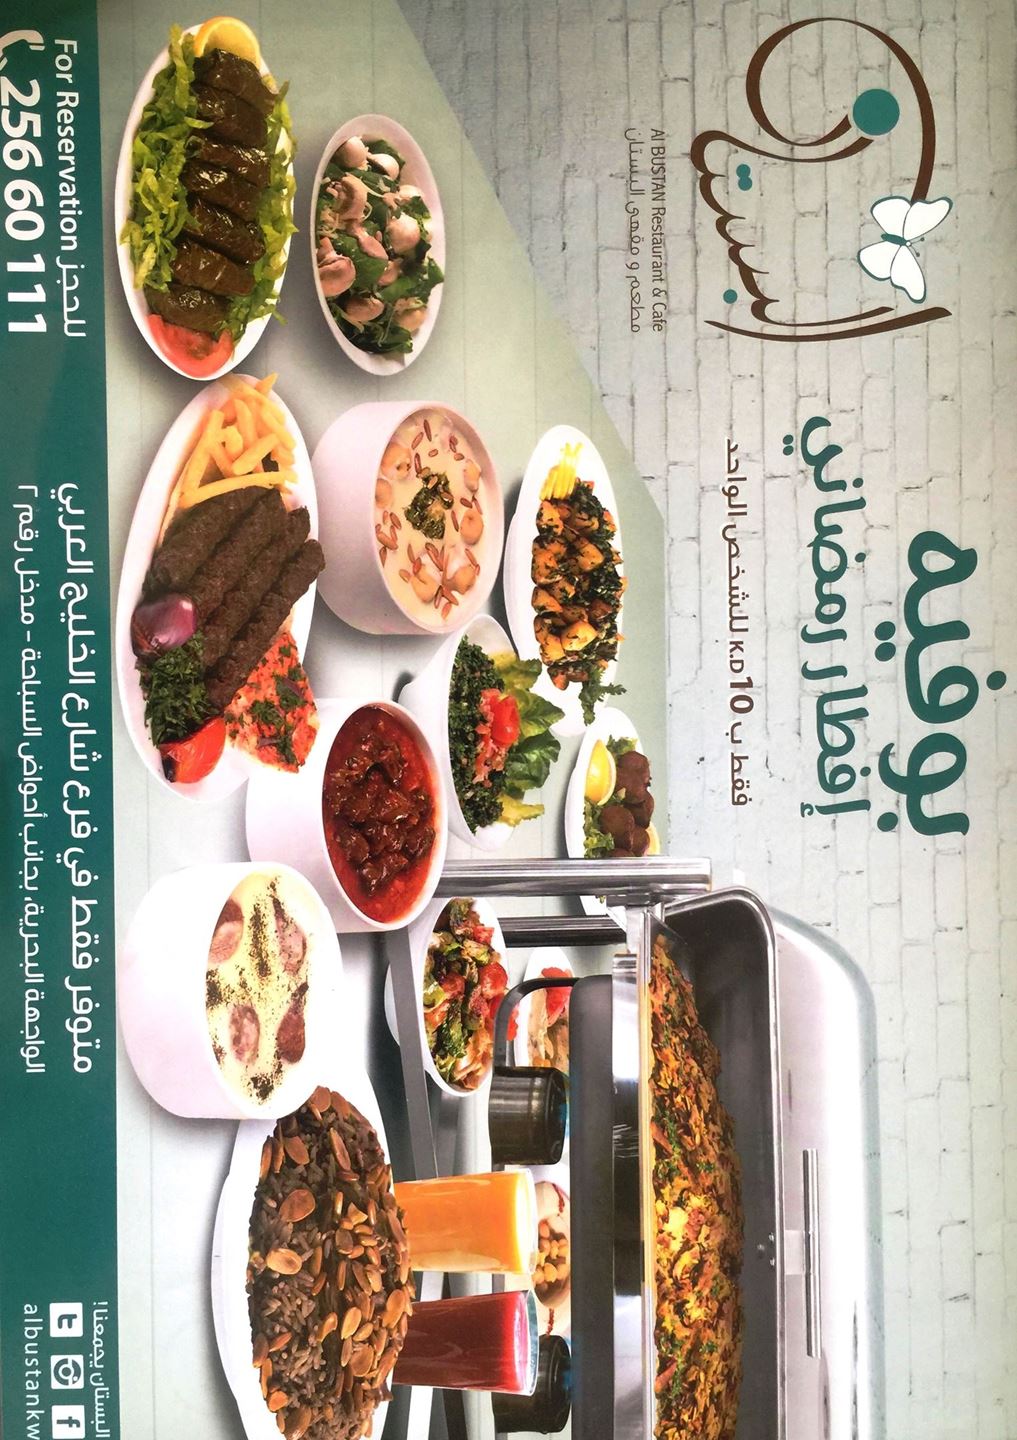 Al Bustan Restaurant Ramadan 2015 Iftar Offer